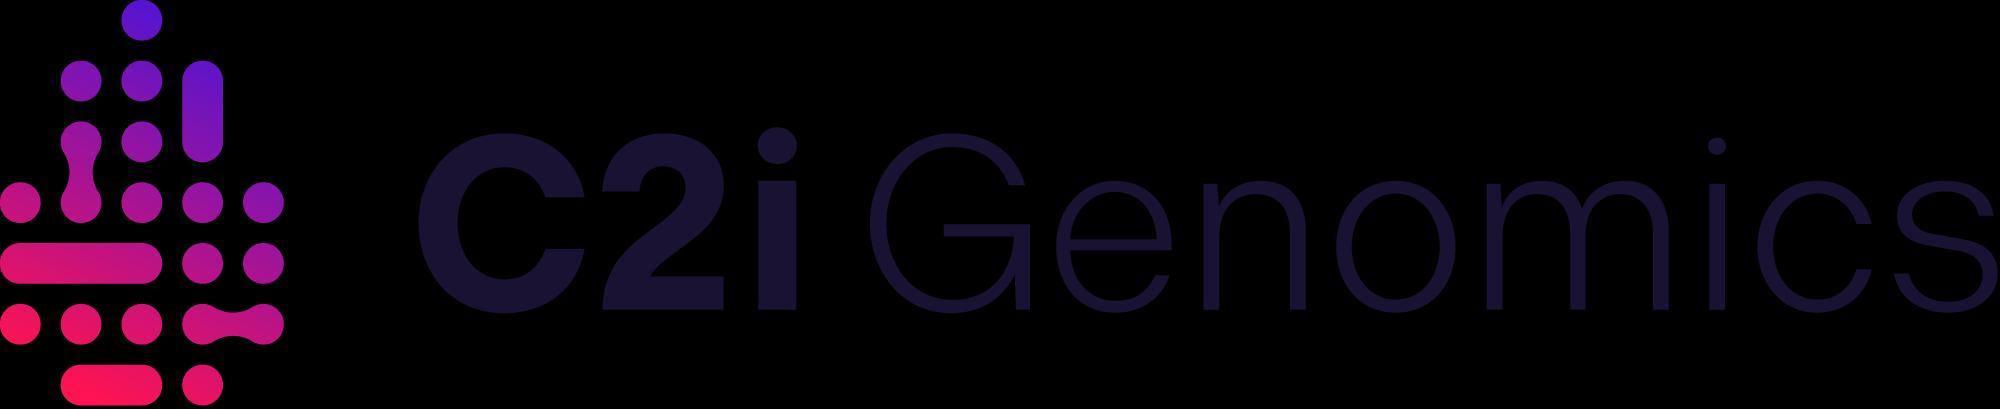 C2i Genomics (סי2אי ג'נומיקס בע"מ)_logo